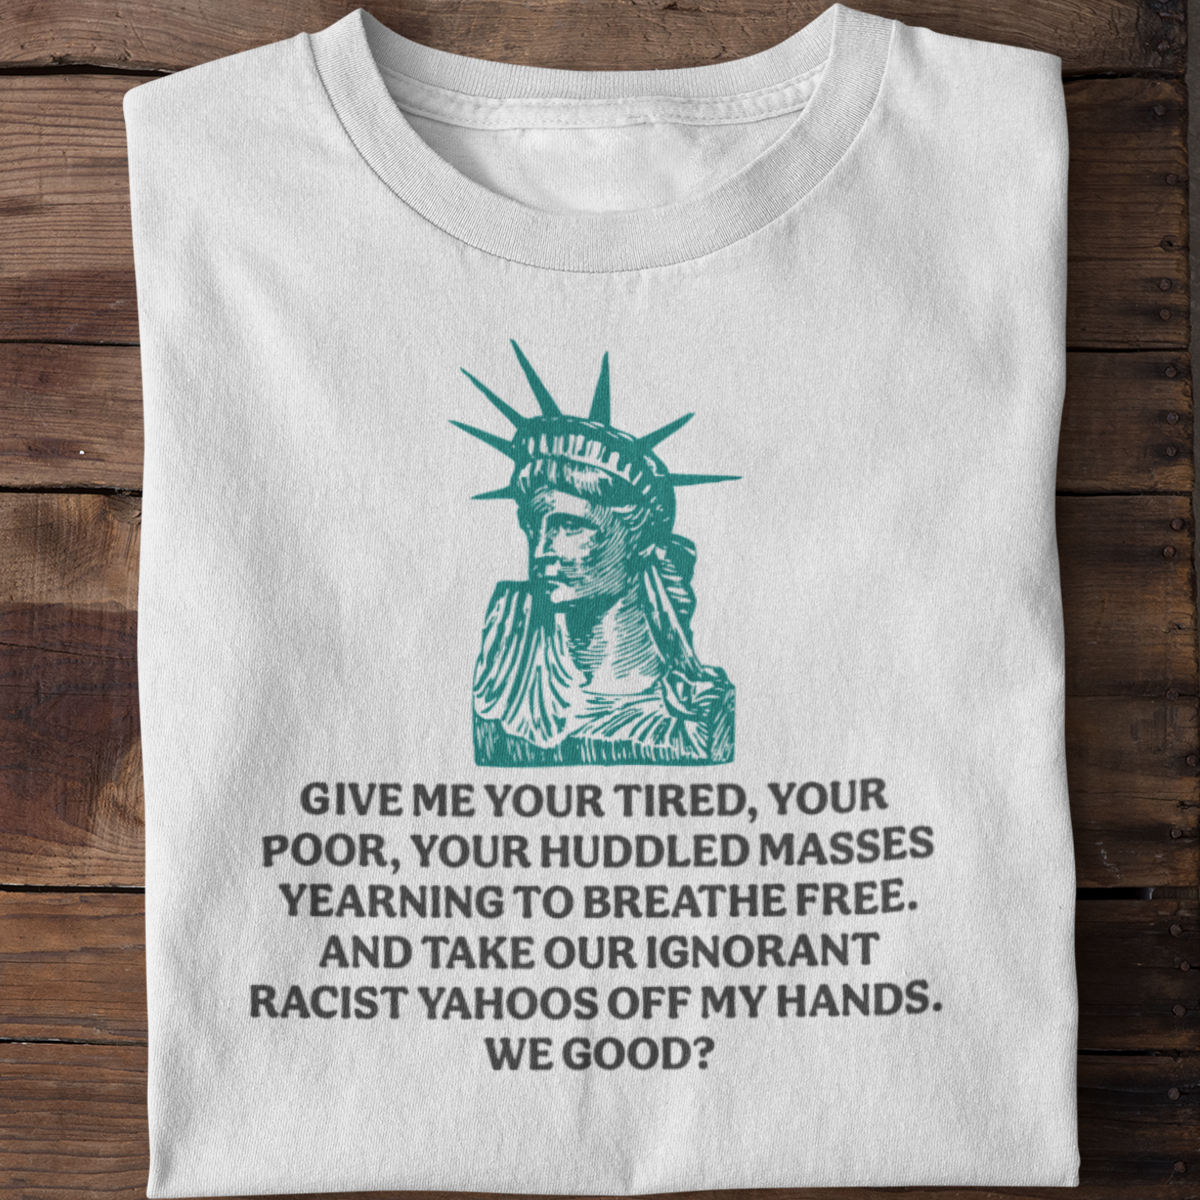 Statue of Liberty t-shirt